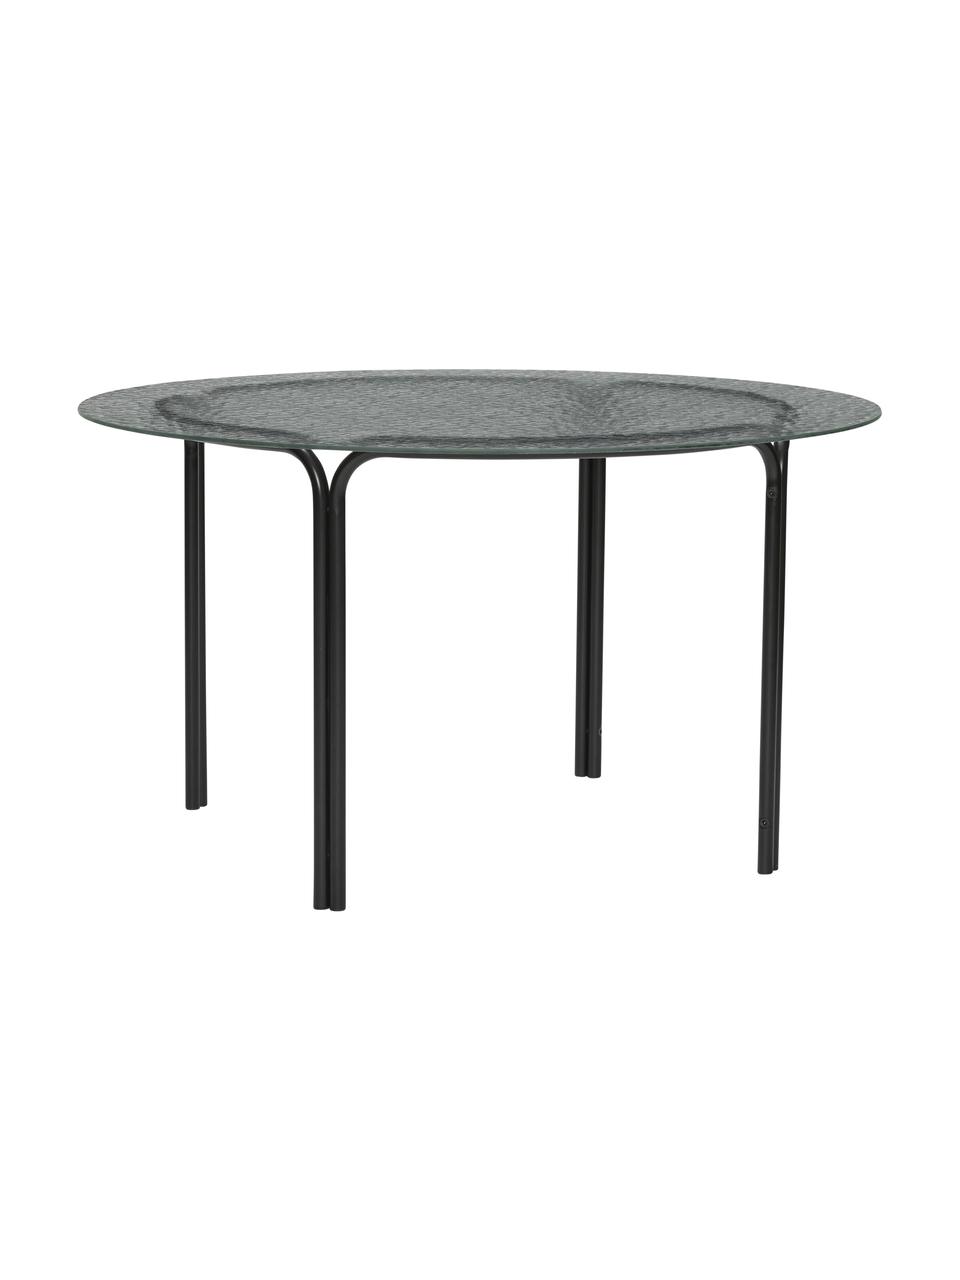 Table basse ronde en verre Orbit, Noir, Ø 80 x haut. 45 cm